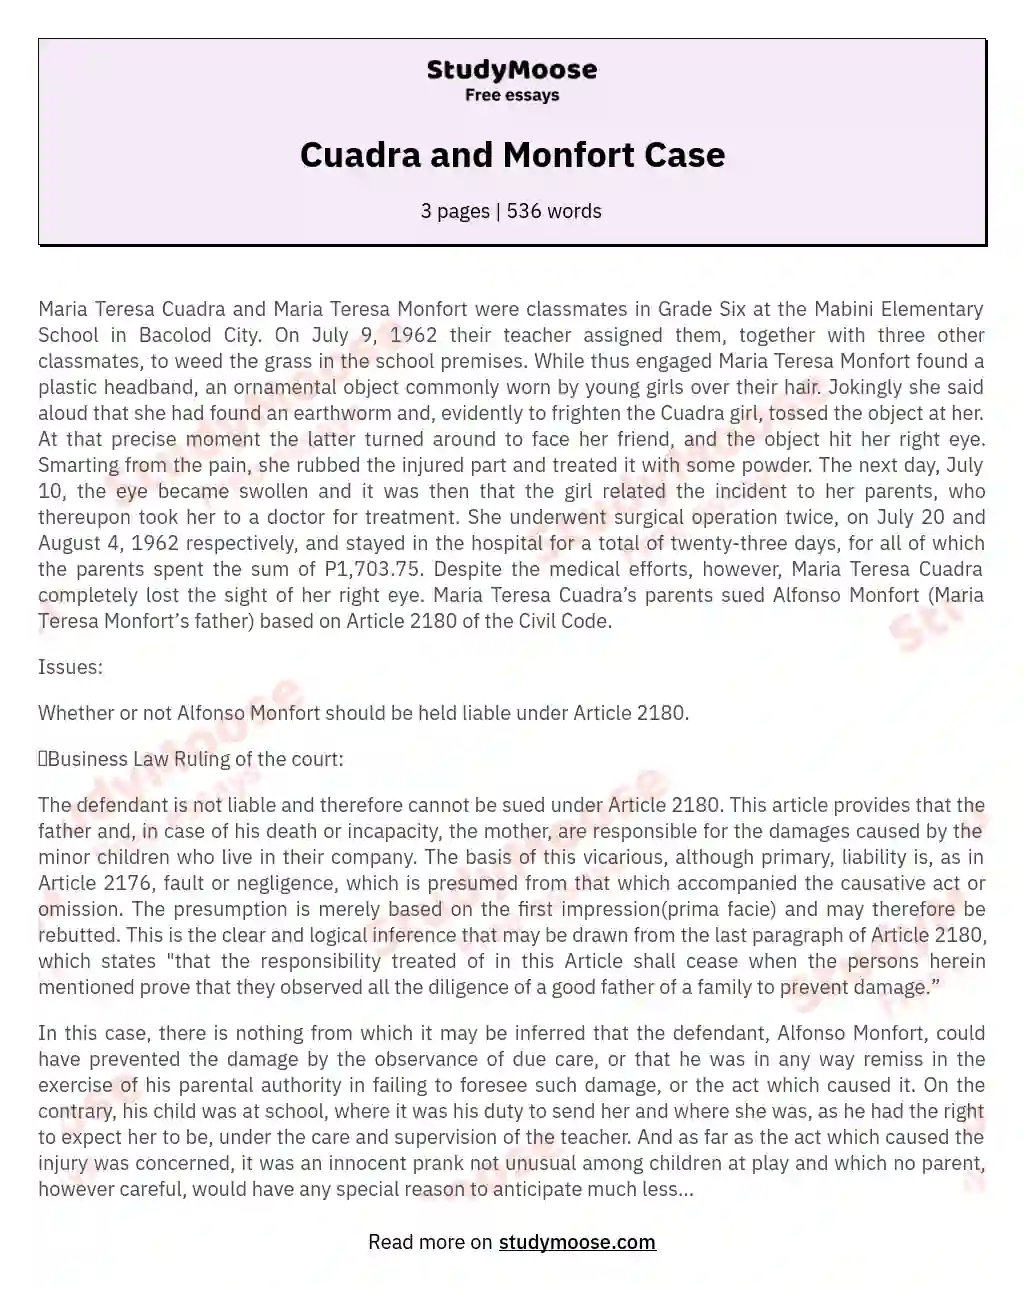 Cuadra and Monfort Case essay